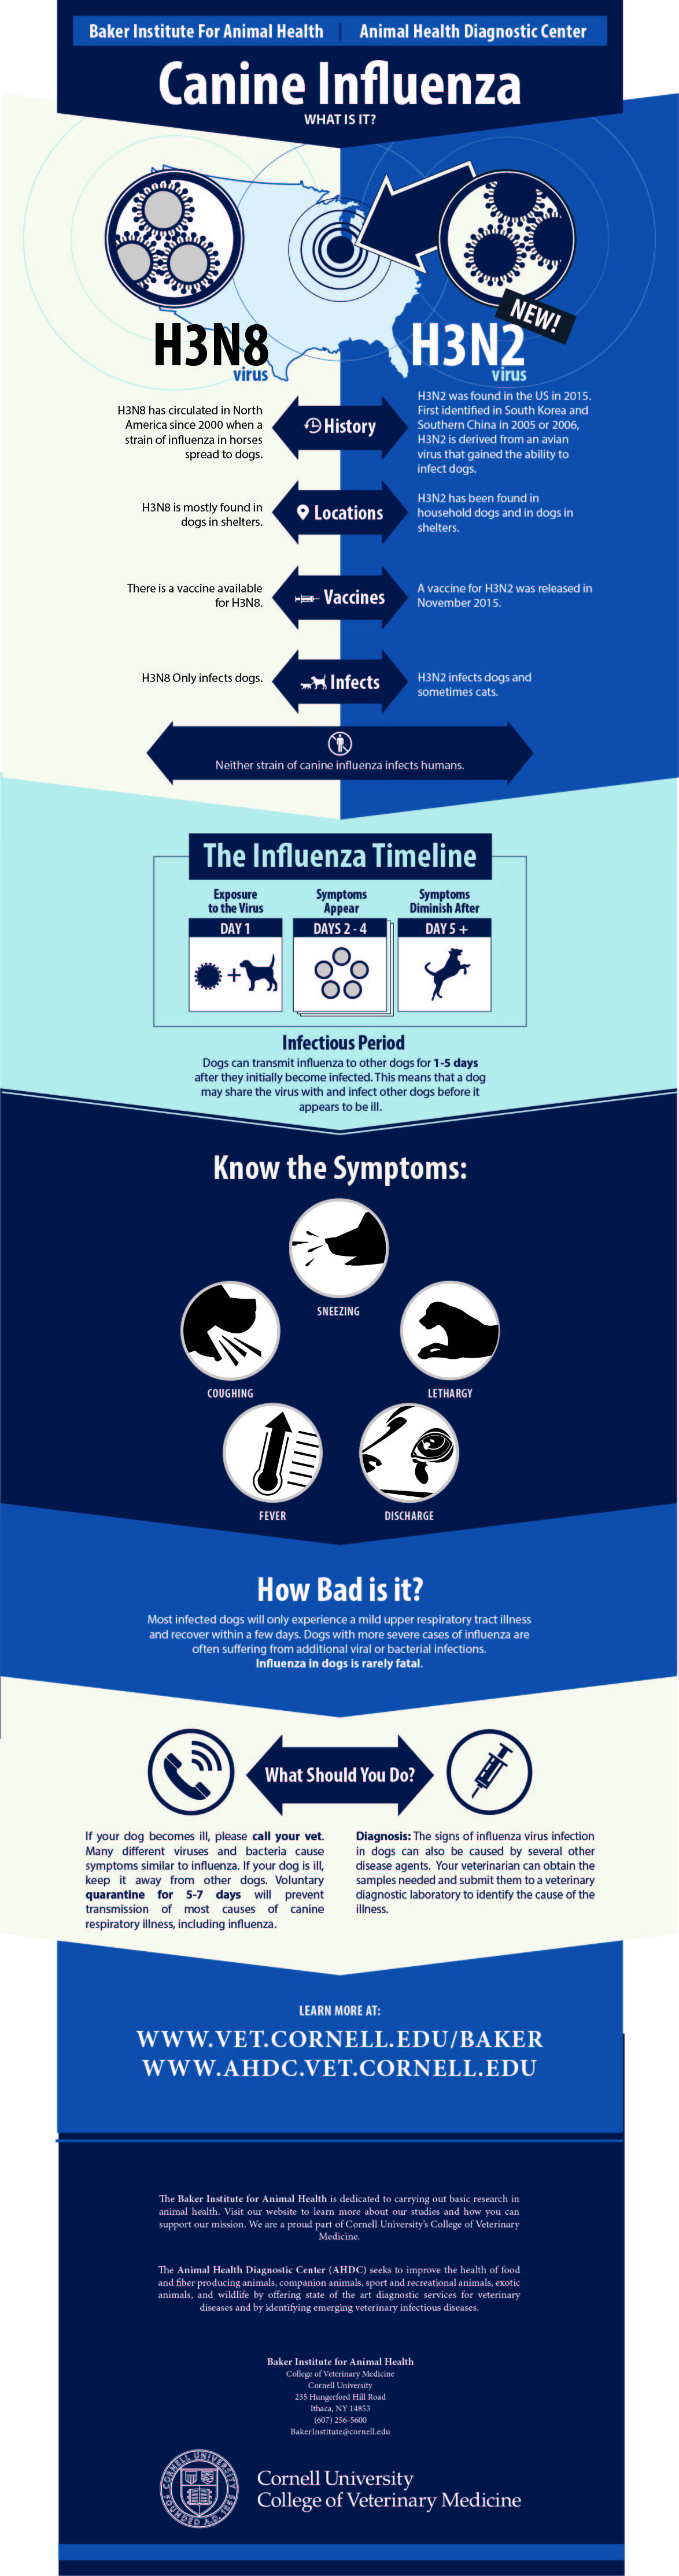 Canine Influenza Graphic